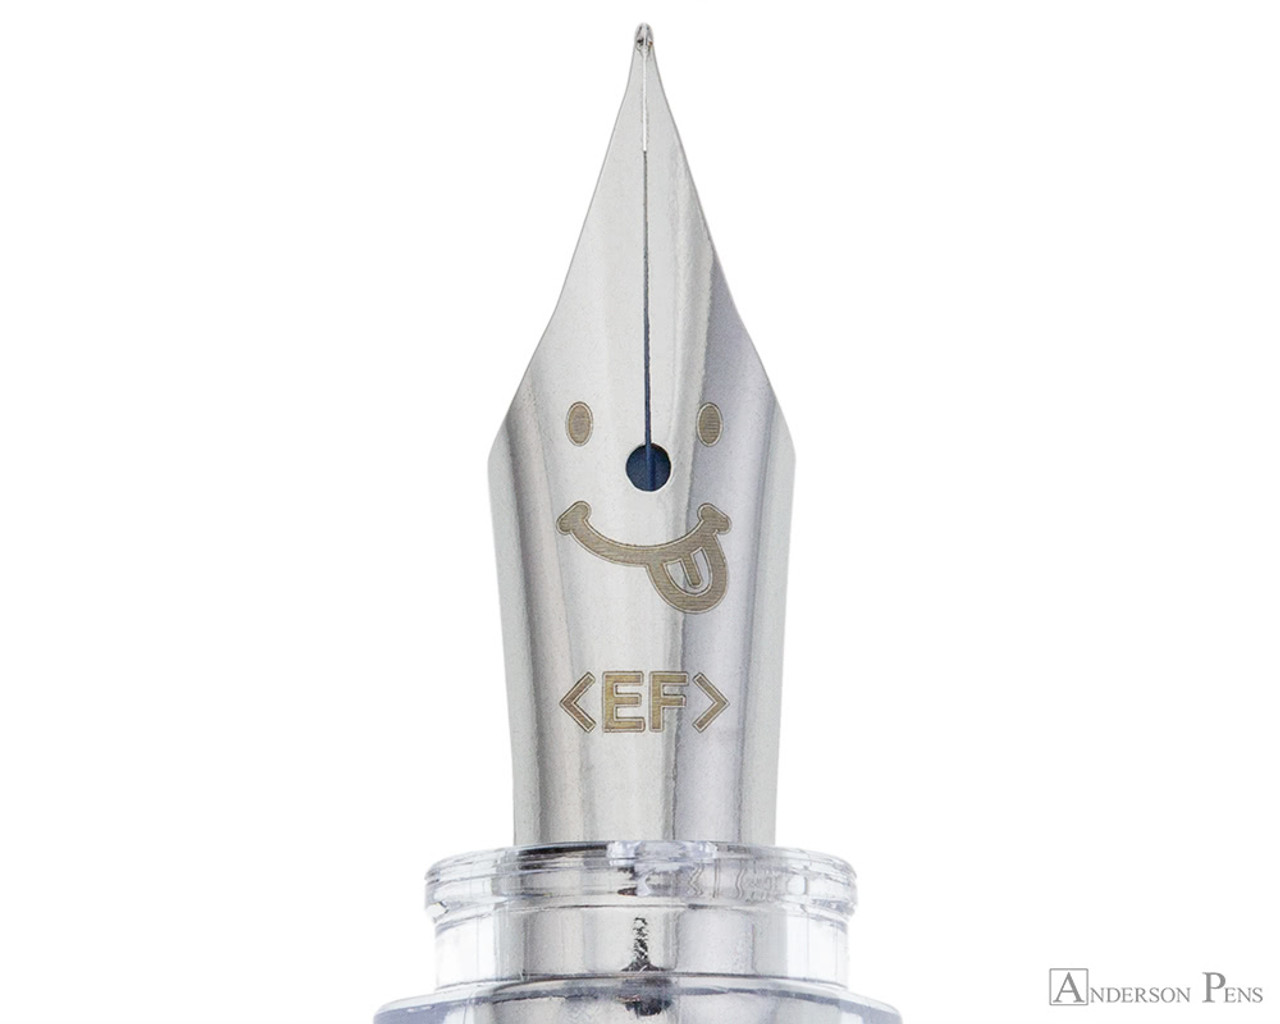 Pilot Kakuno Fountain Pen - Clear - Extra Fine Nib